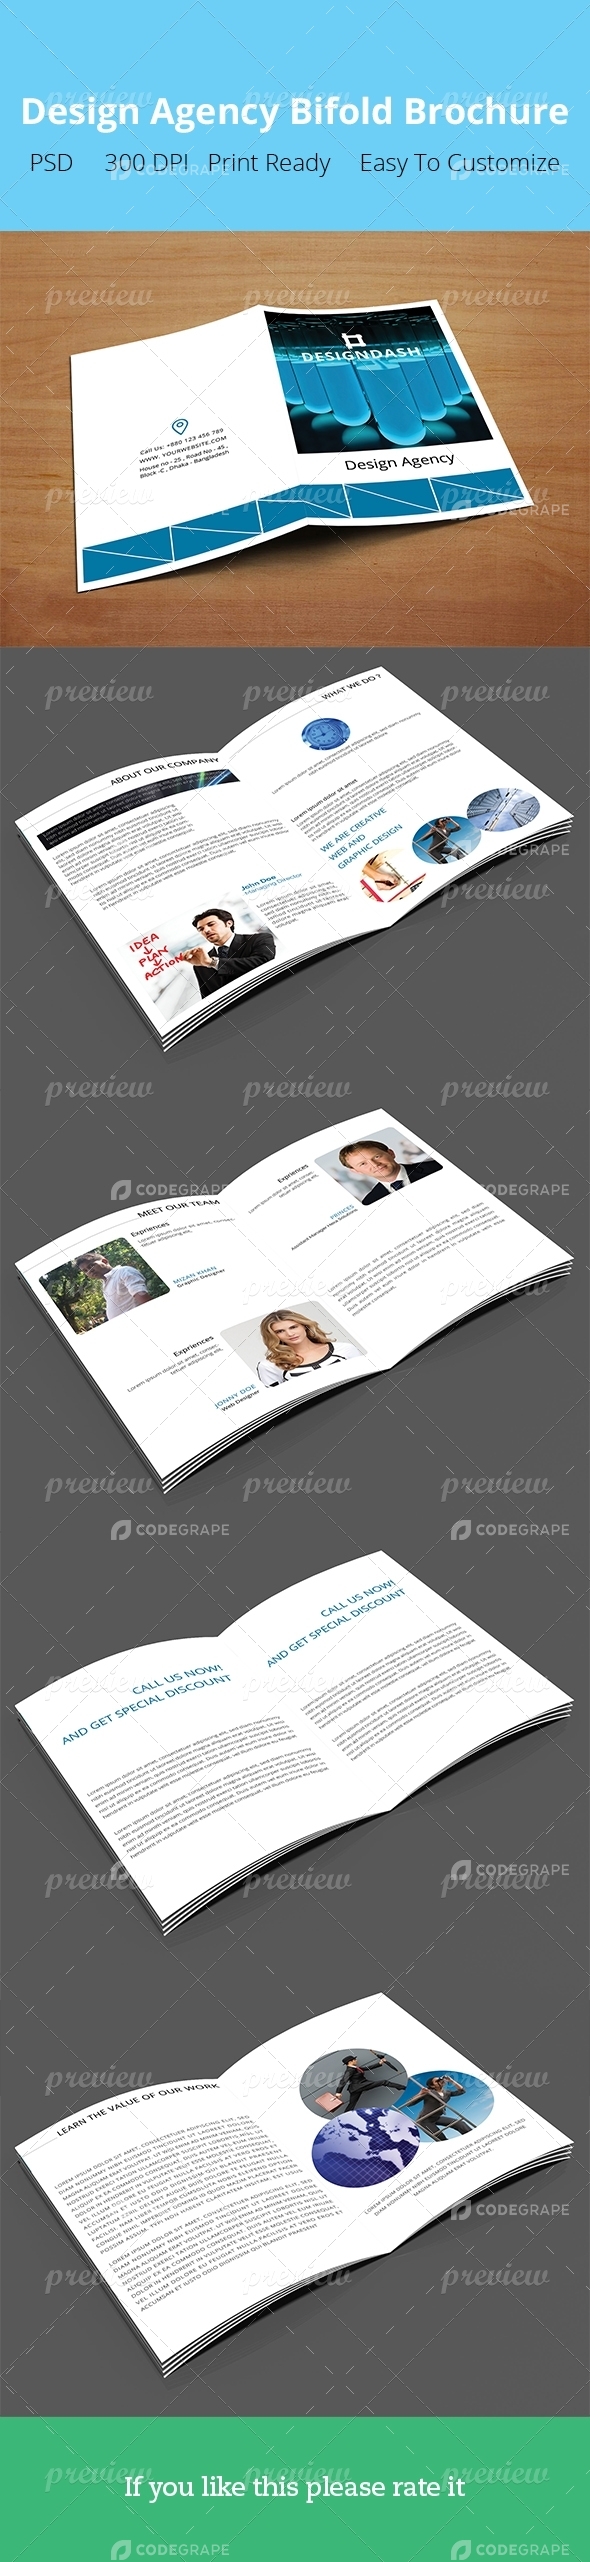 Design Agency Bifold Brochure